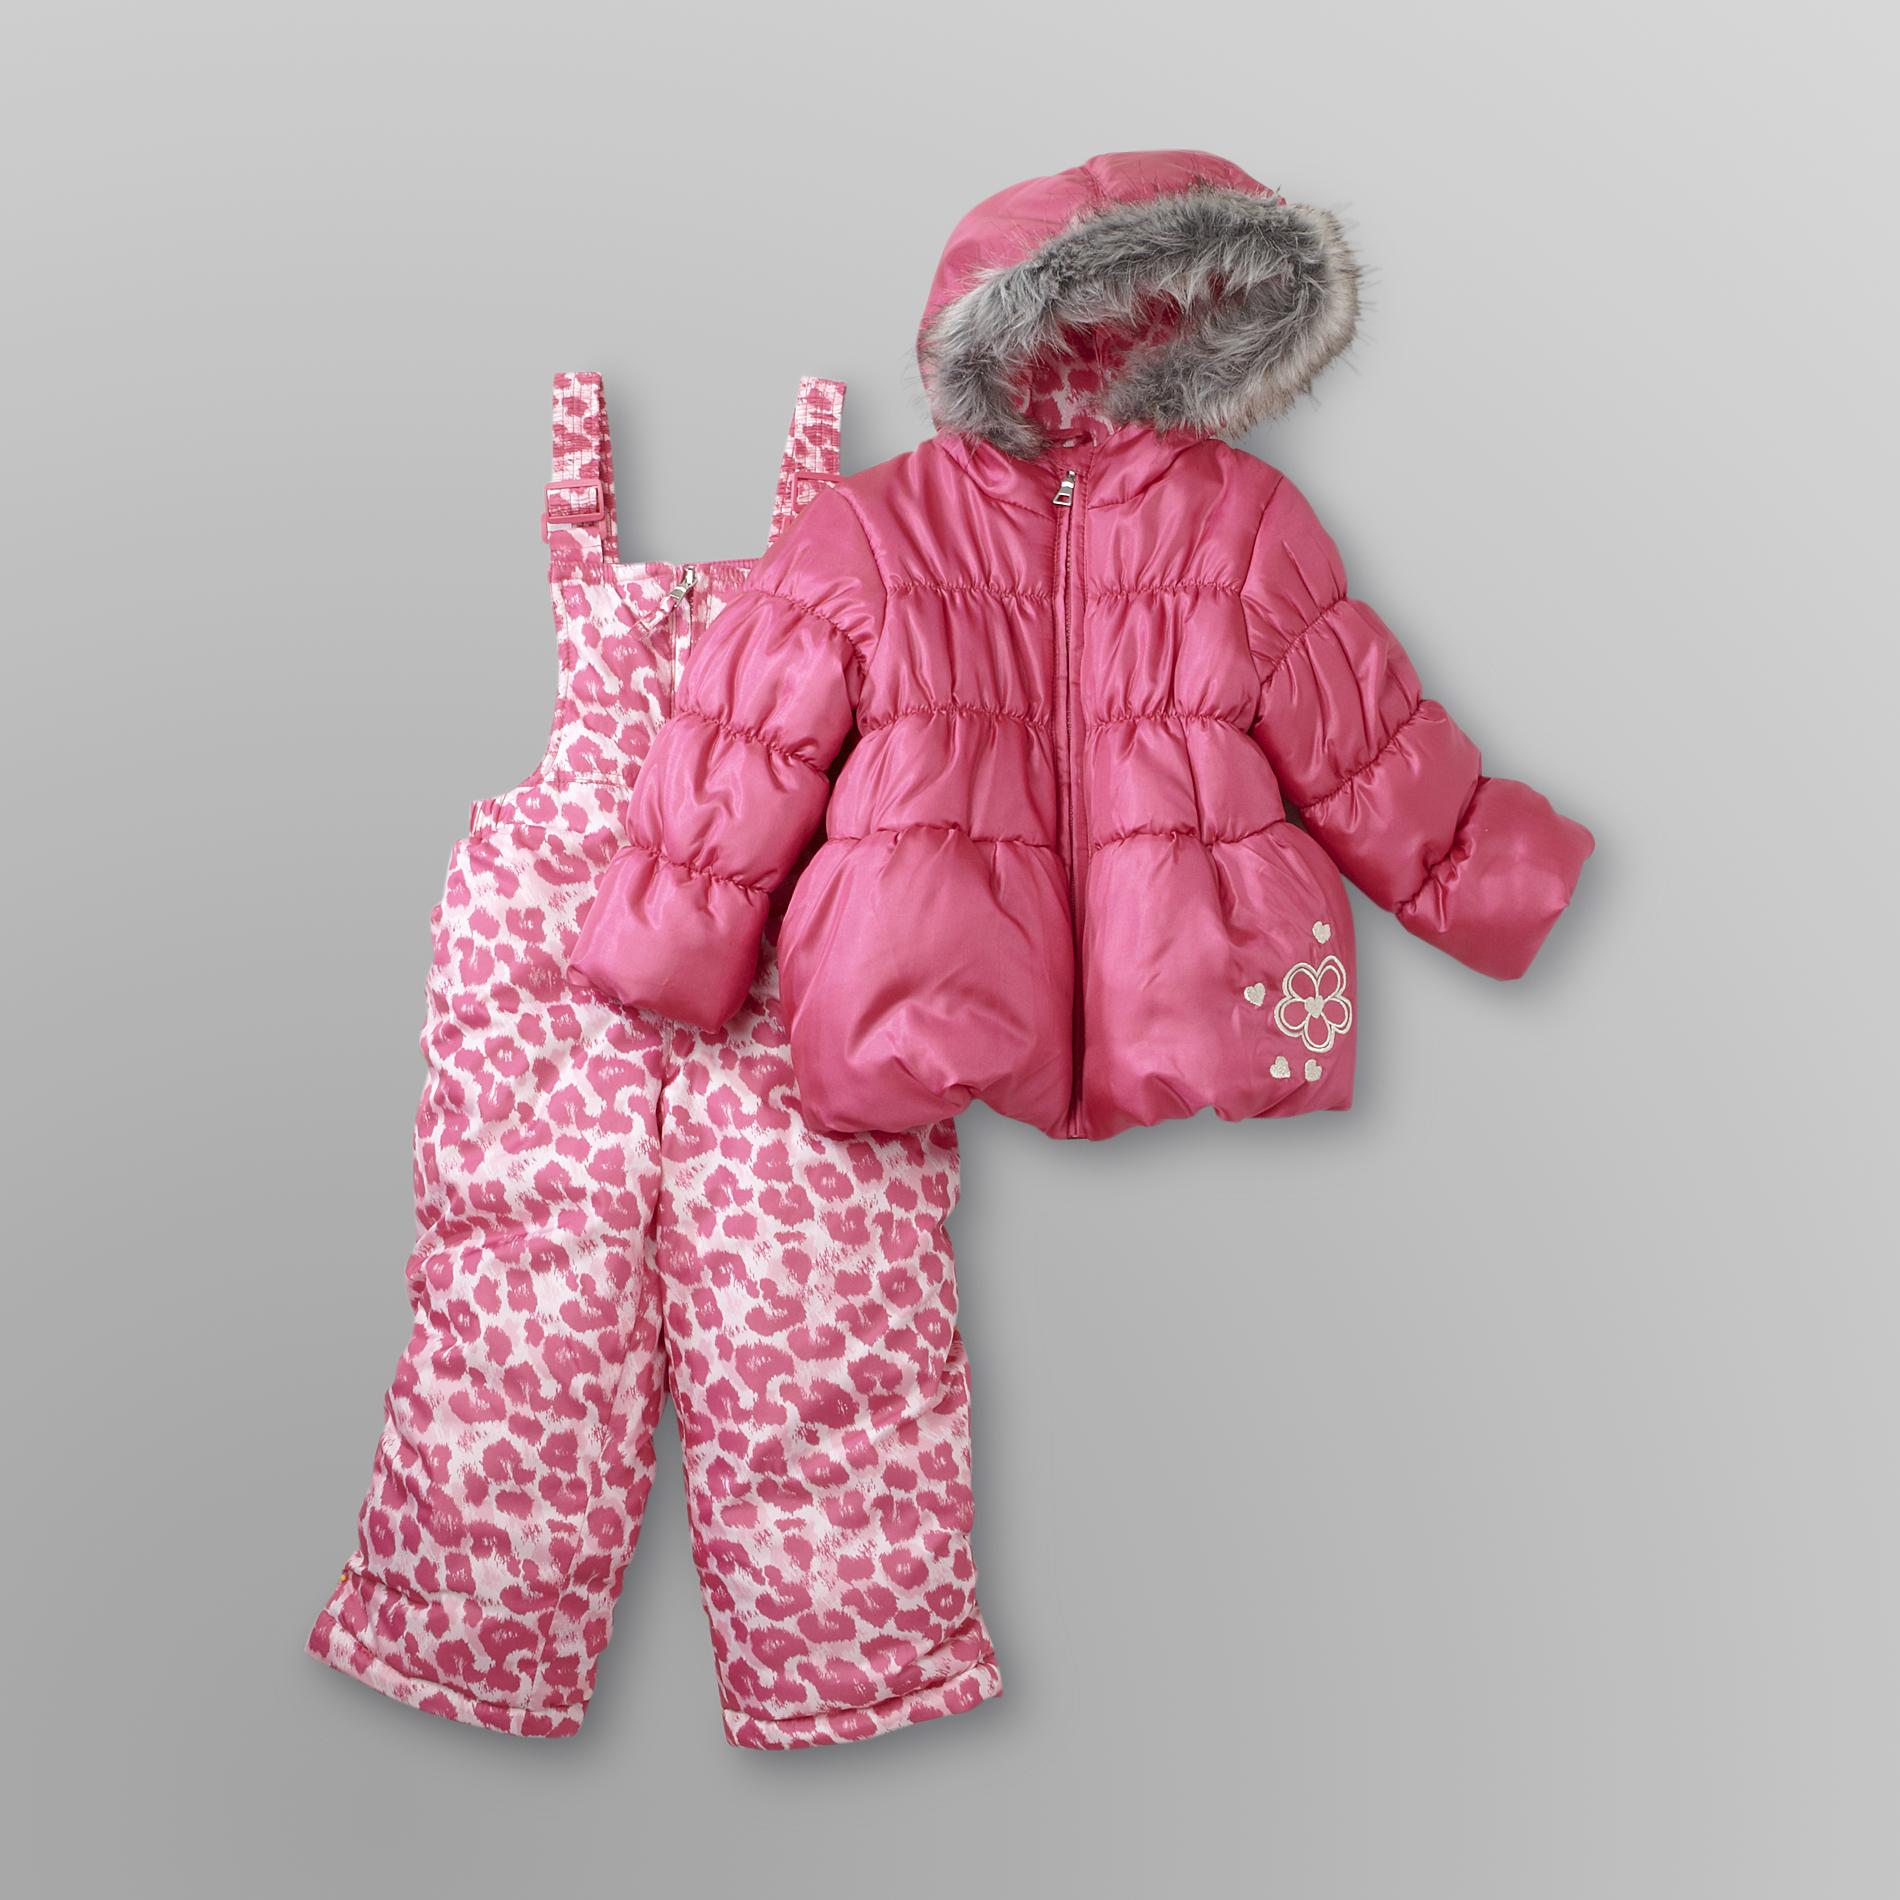 WonderKids Toddler Girl's Snow Pants & Jacket - Leopard Print